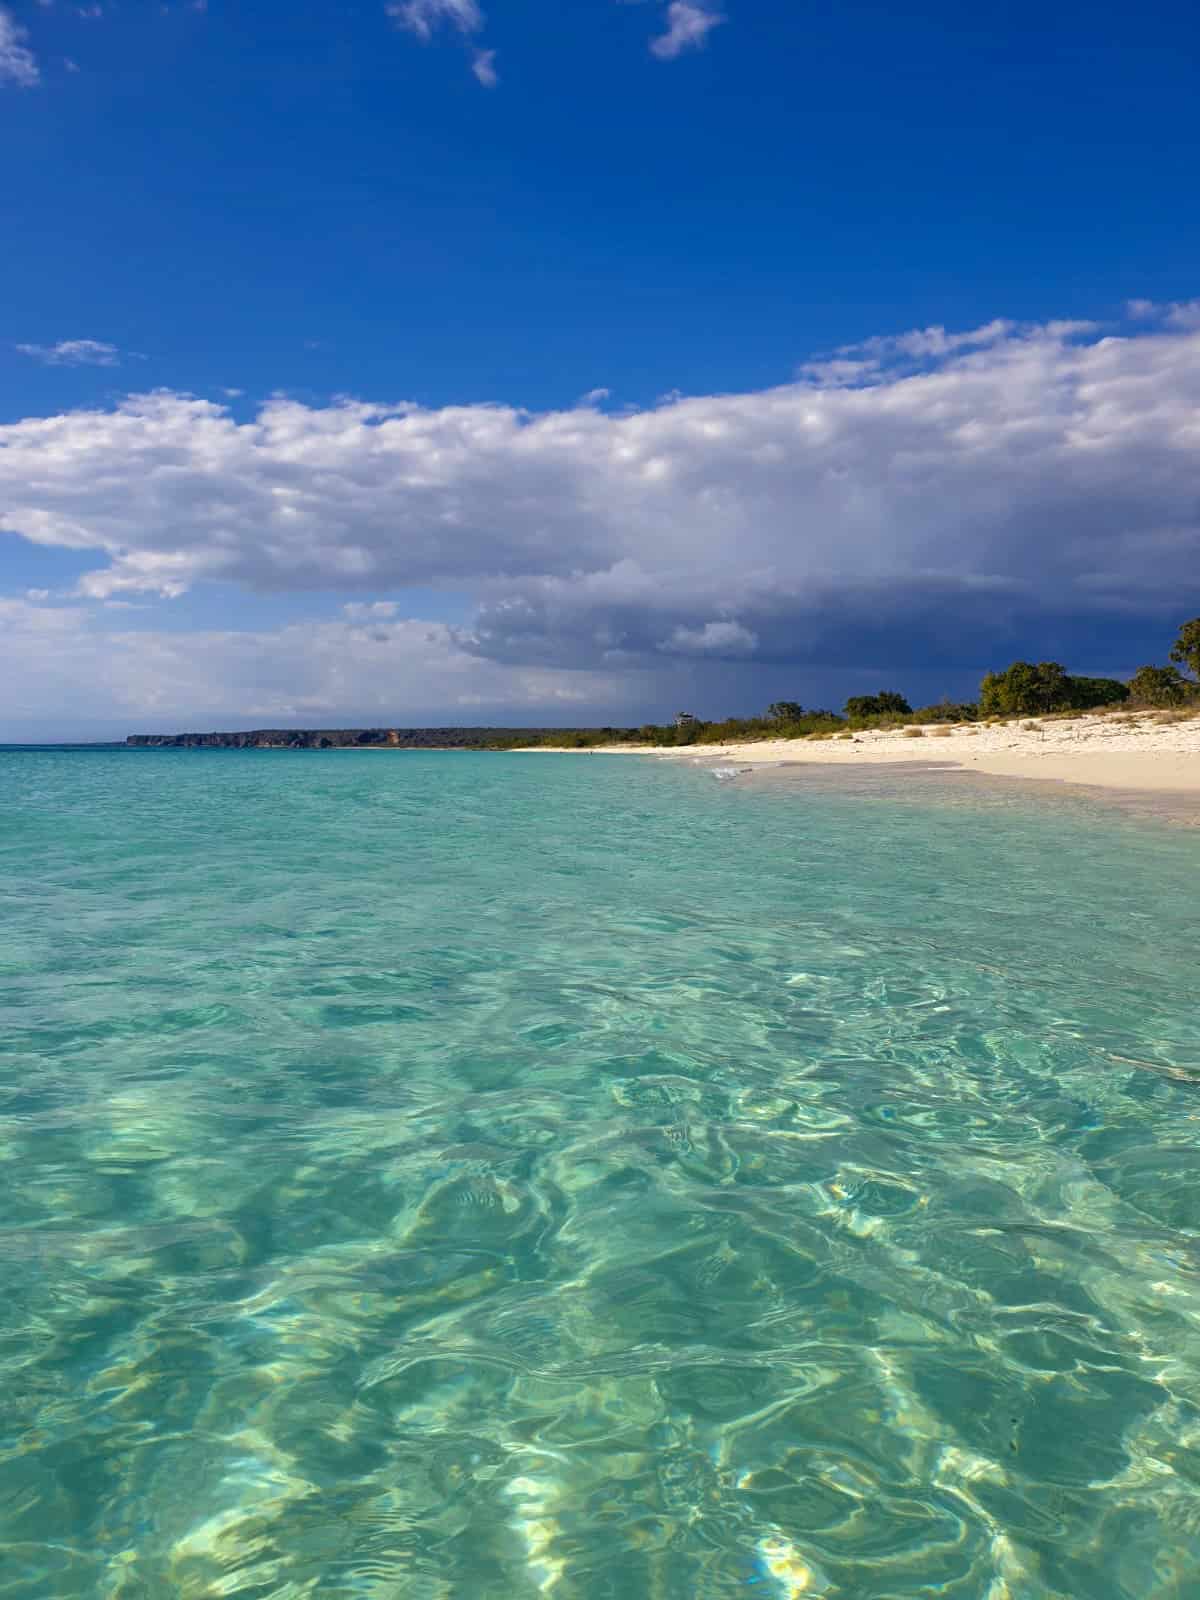 Bahia de las Aquilas in the Dominican Republic, one of the best Caribbean beaches